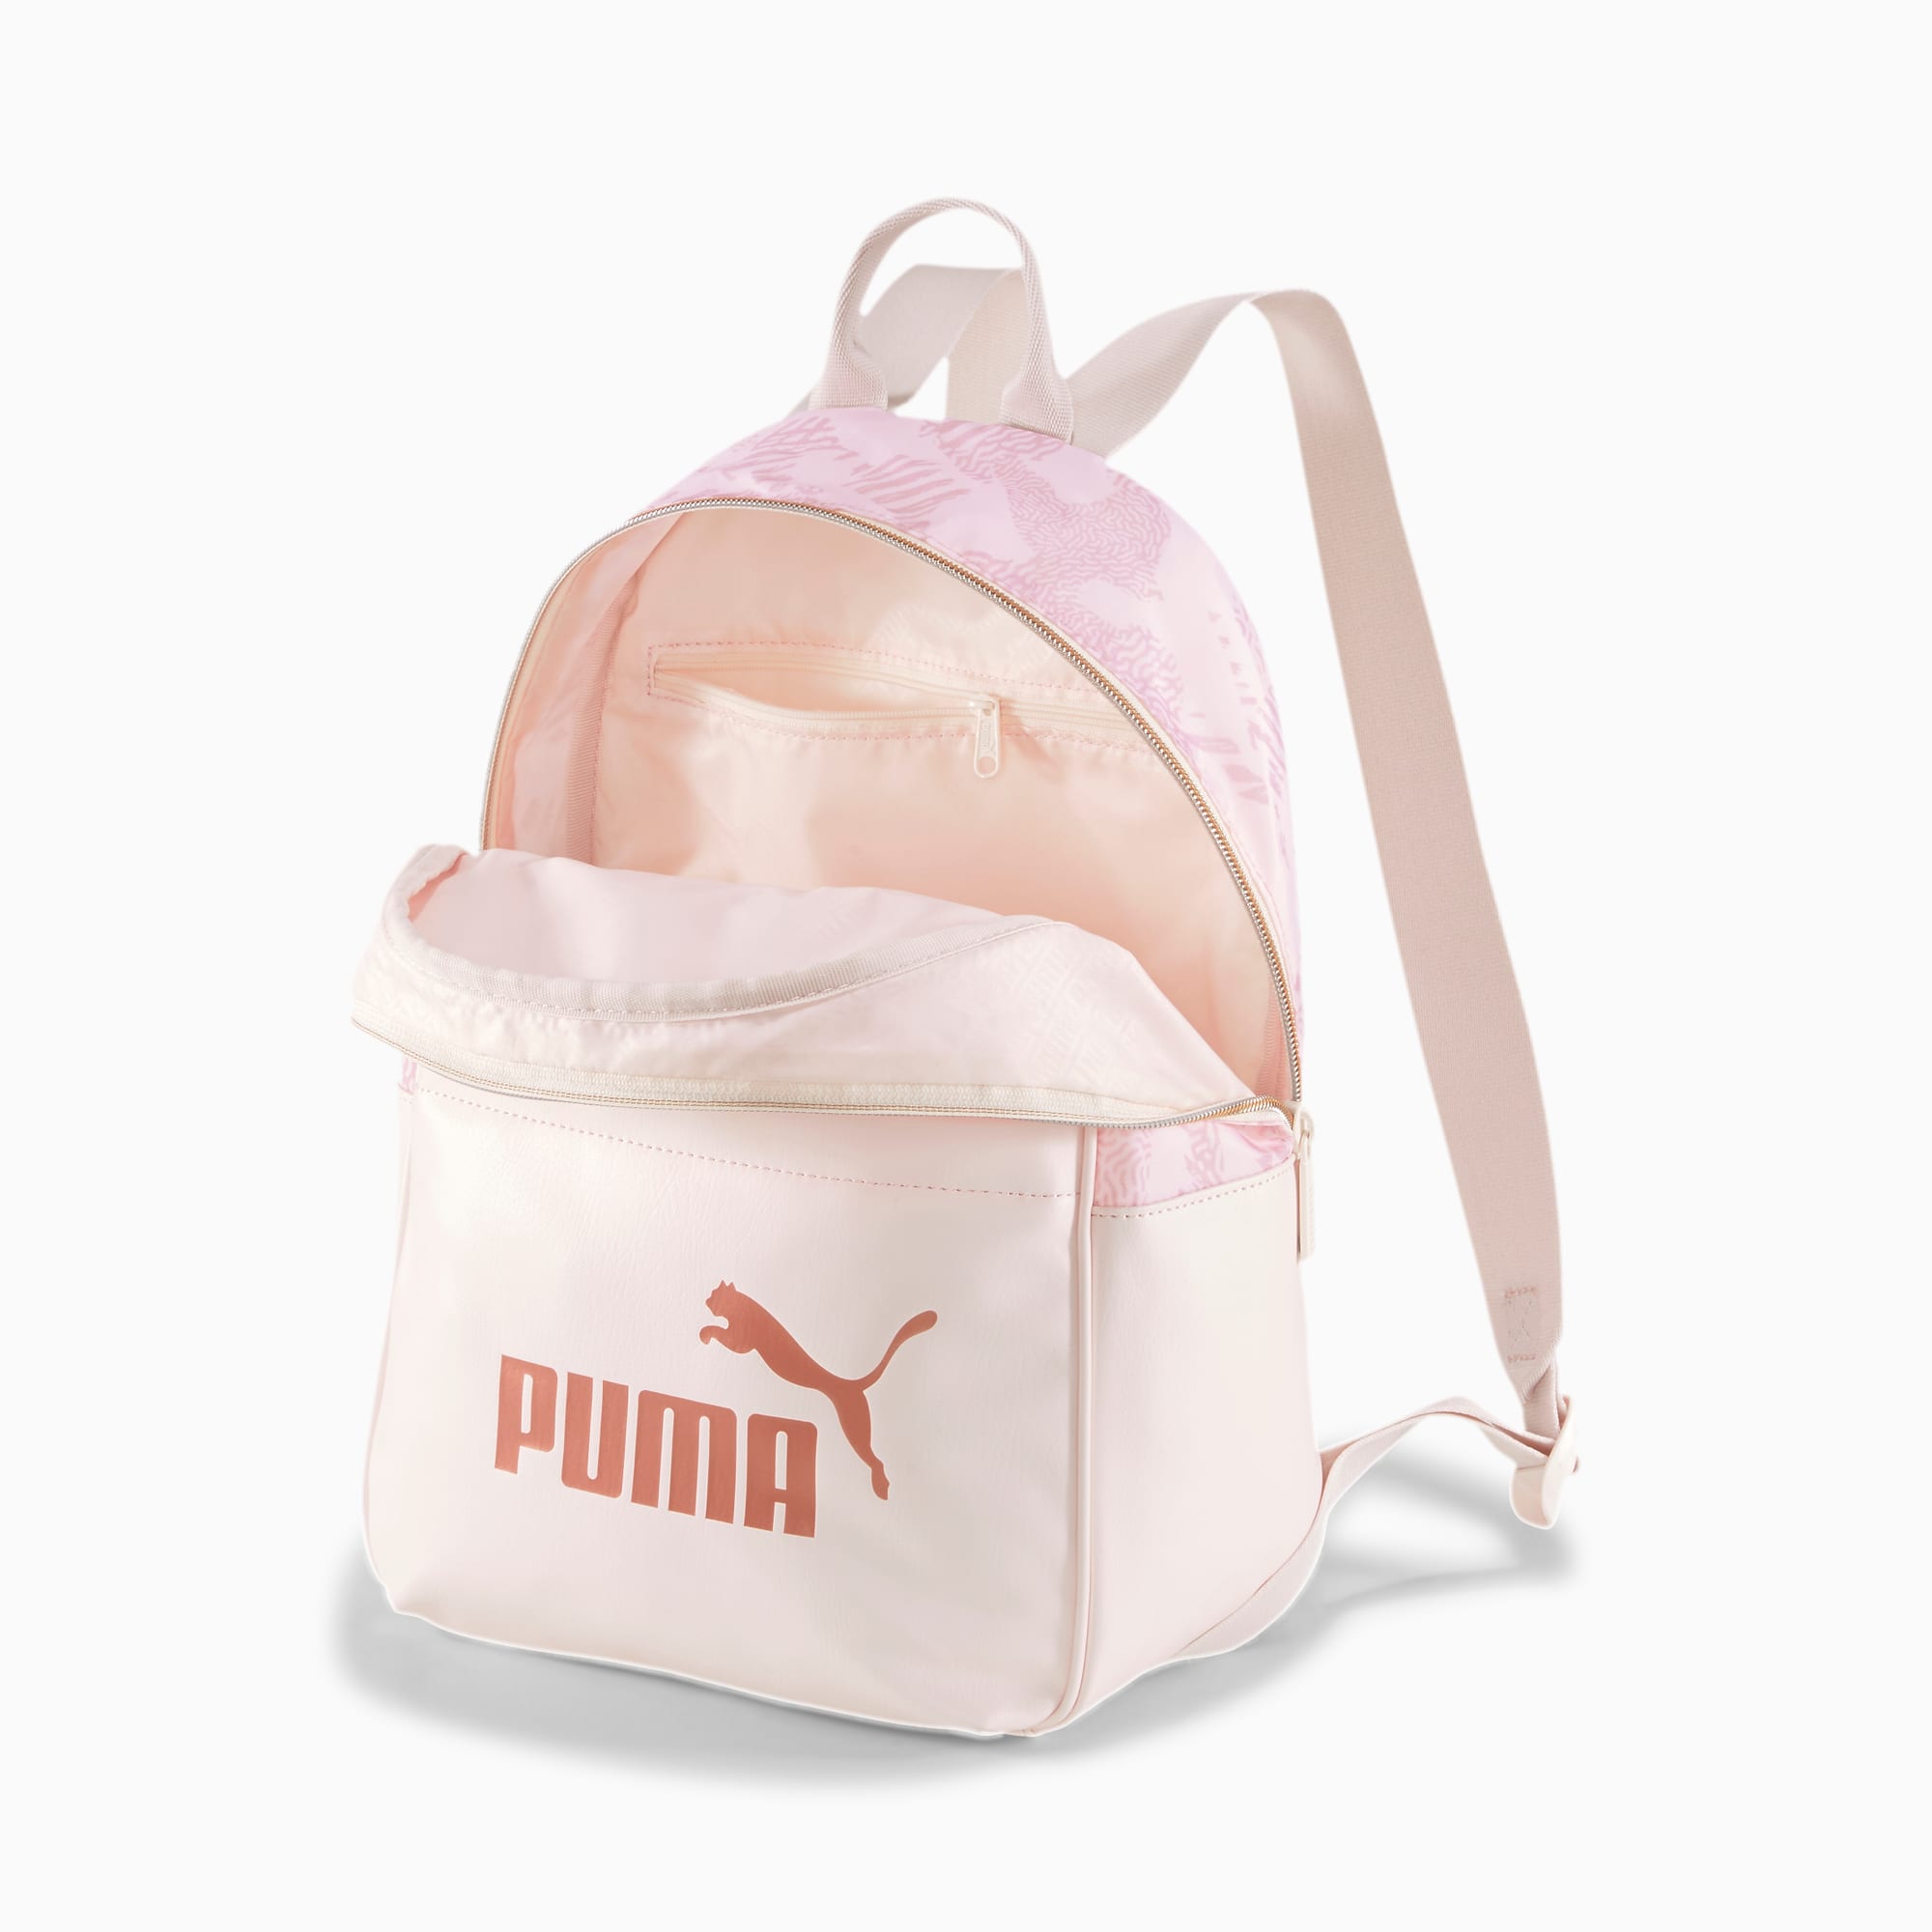 mochila puma wmn core backpack